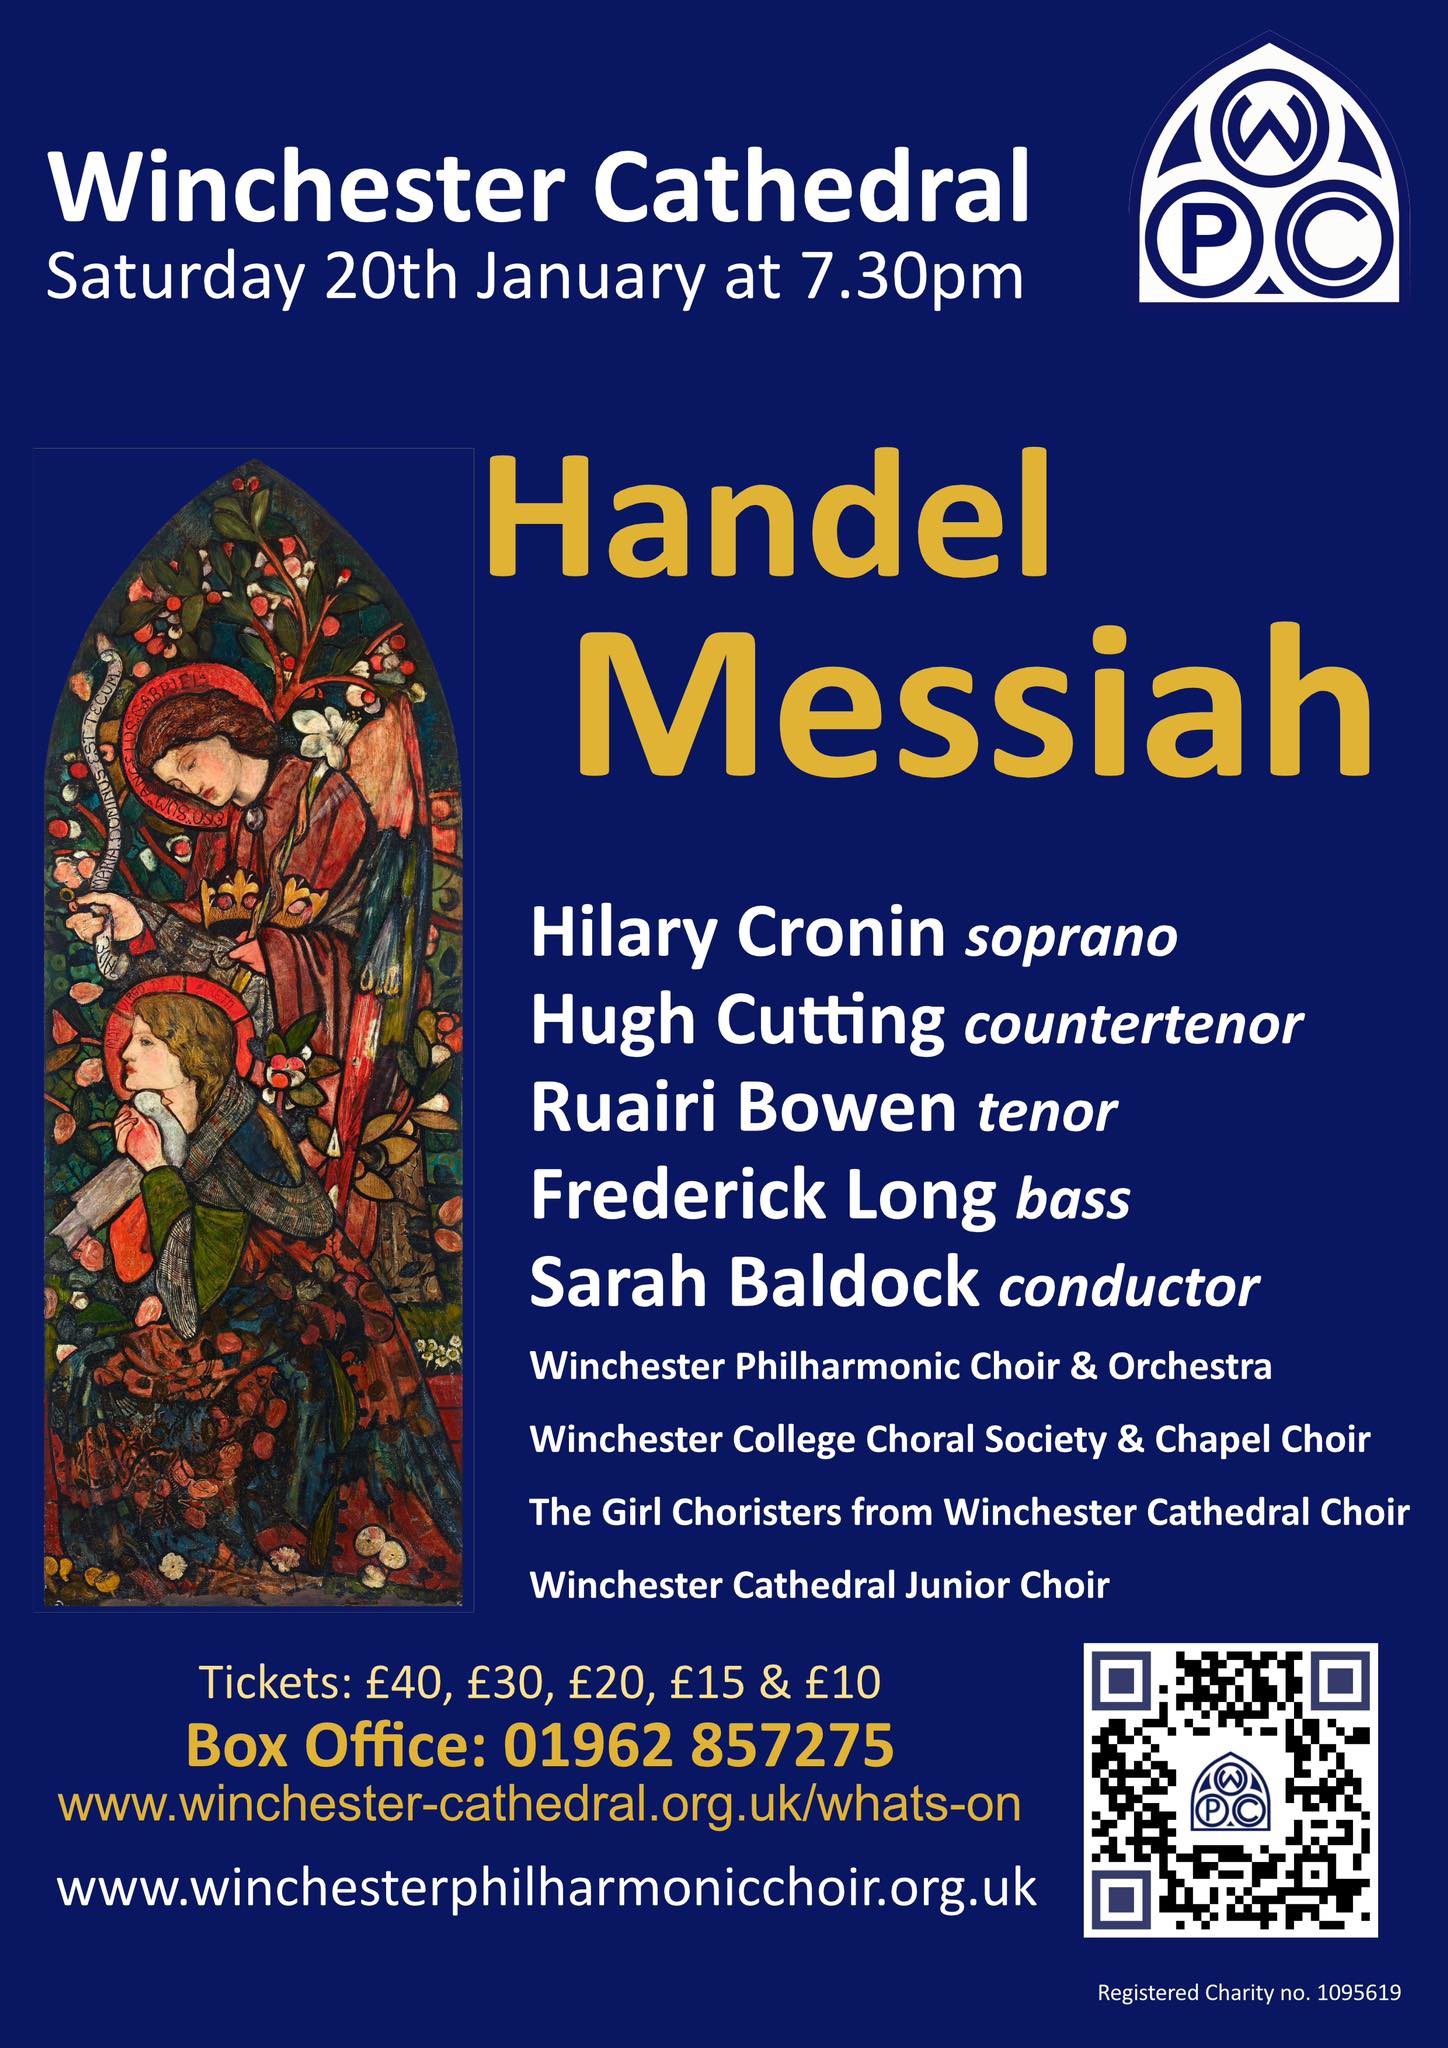 Winchester Philharmonic Choir: Handel Messiah Concert